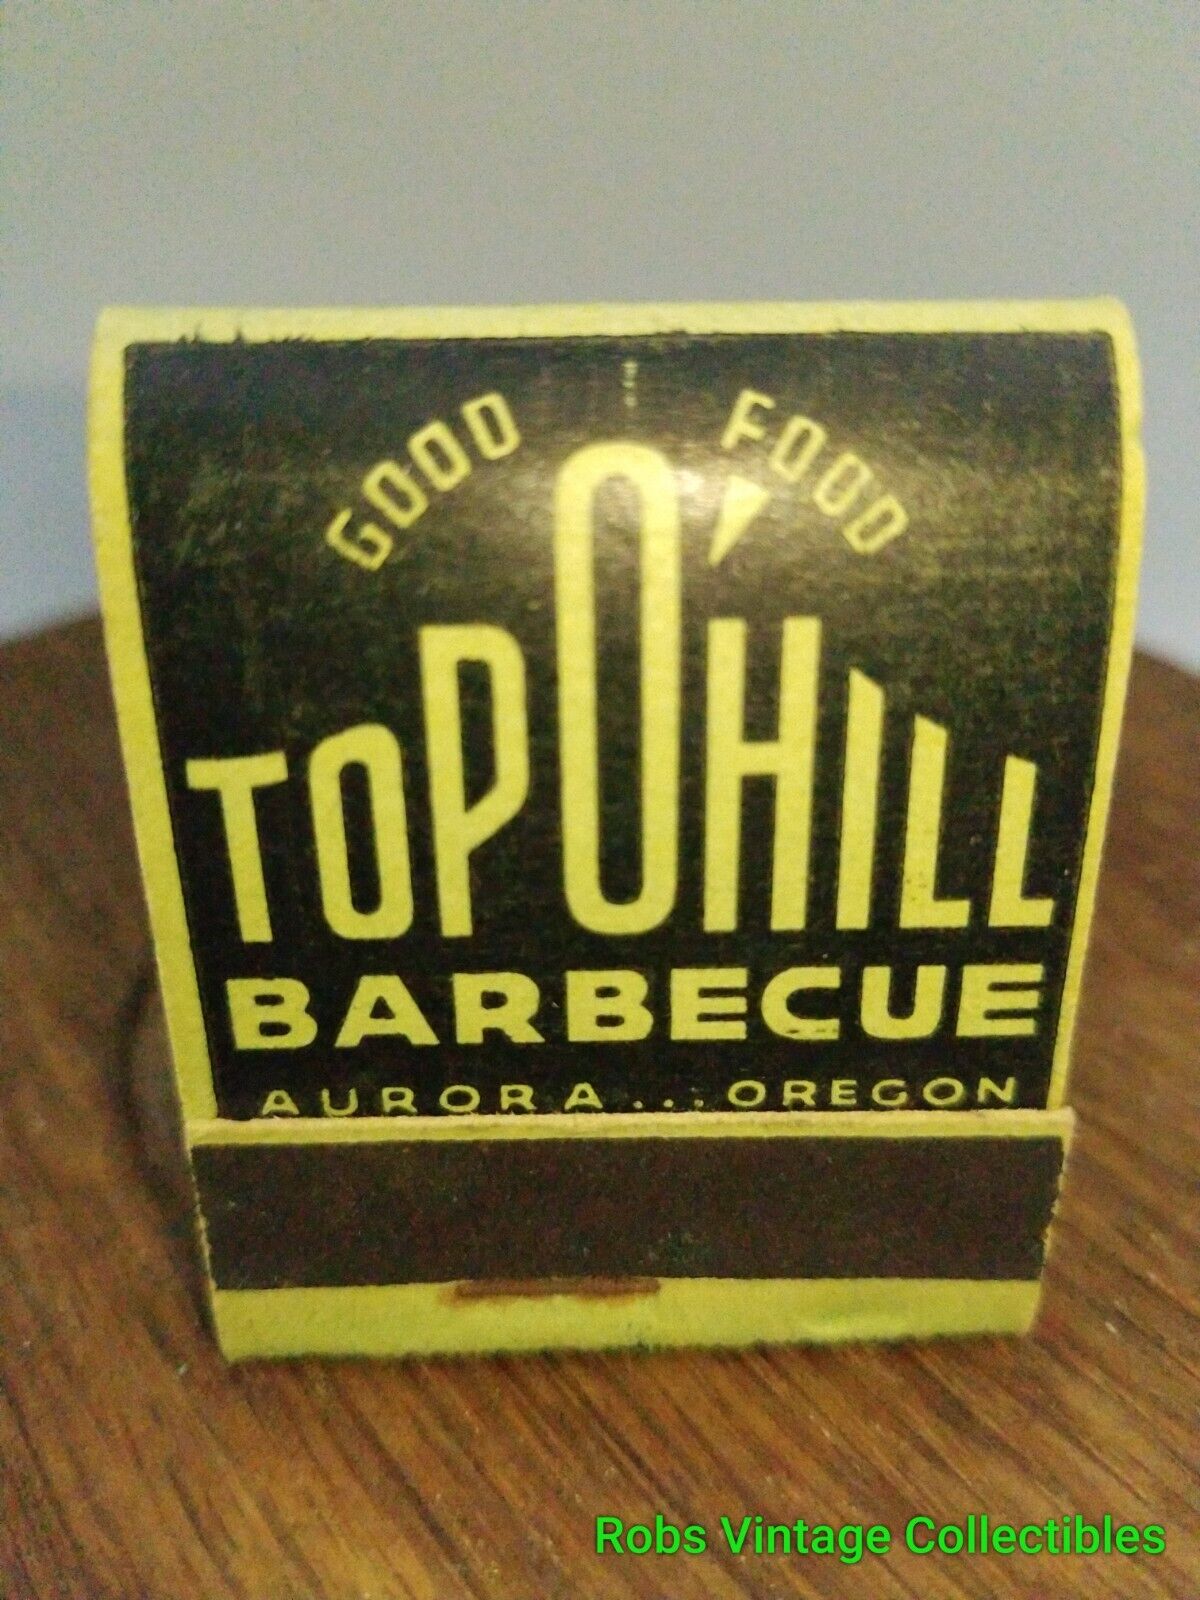 Matchbook topOhill Barbecue Aurora Oregon Vintage Restaurant Advertising 